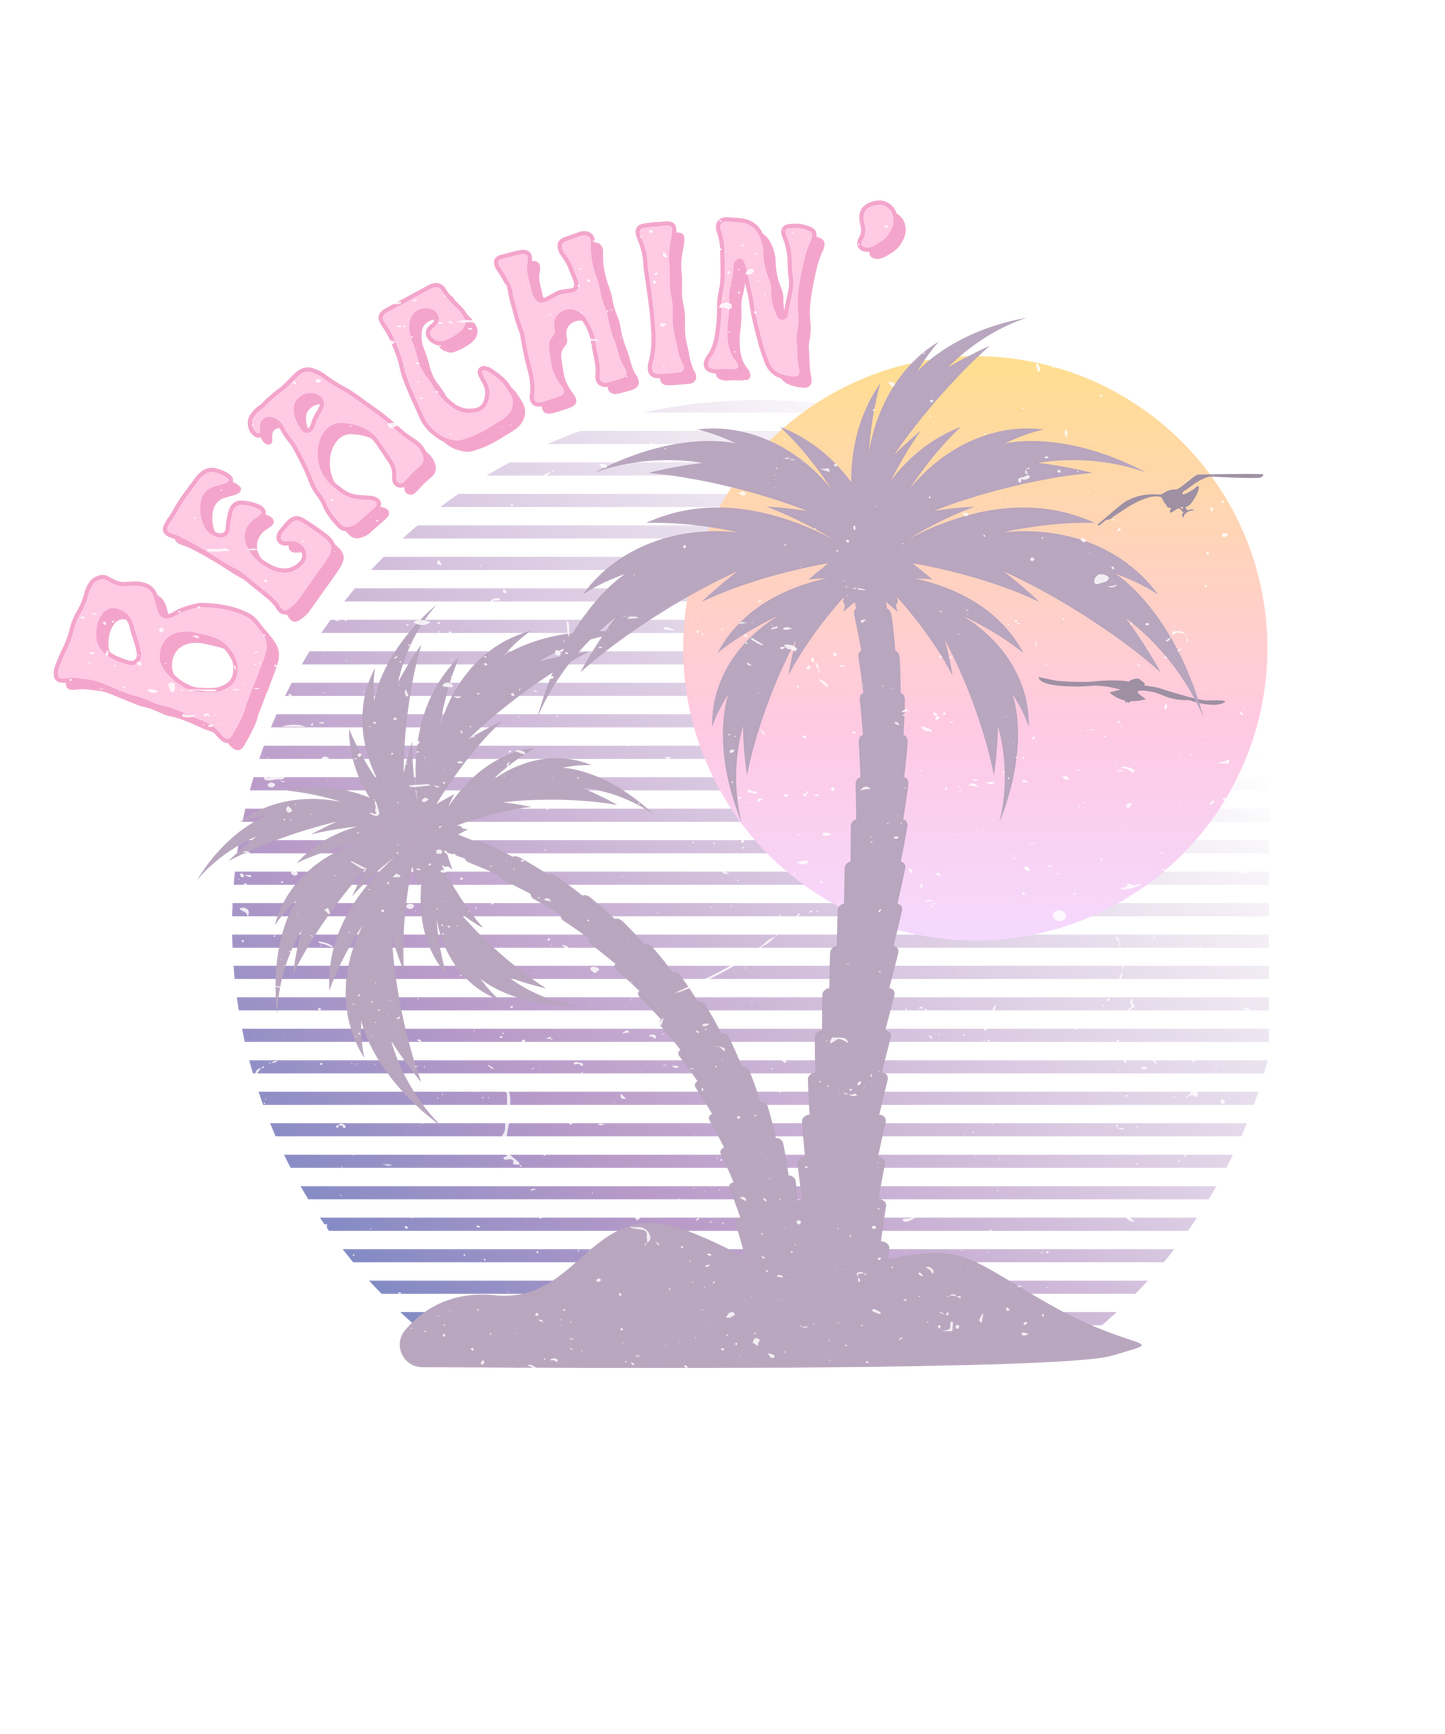 Beachin' Logo